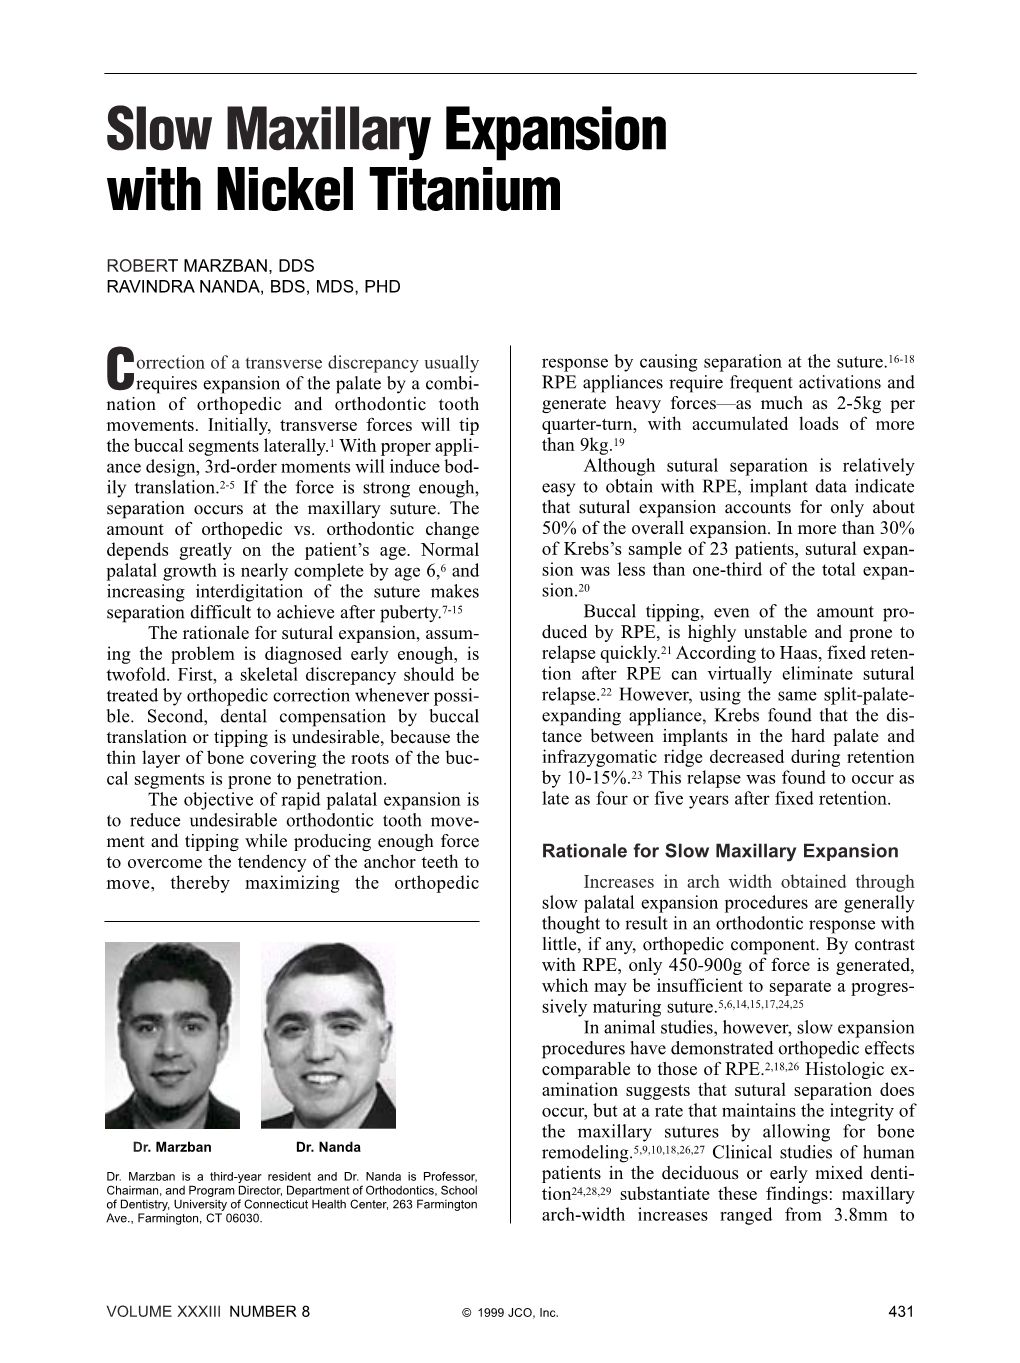 Slow Maxillary Expansion with Nickel Titanium